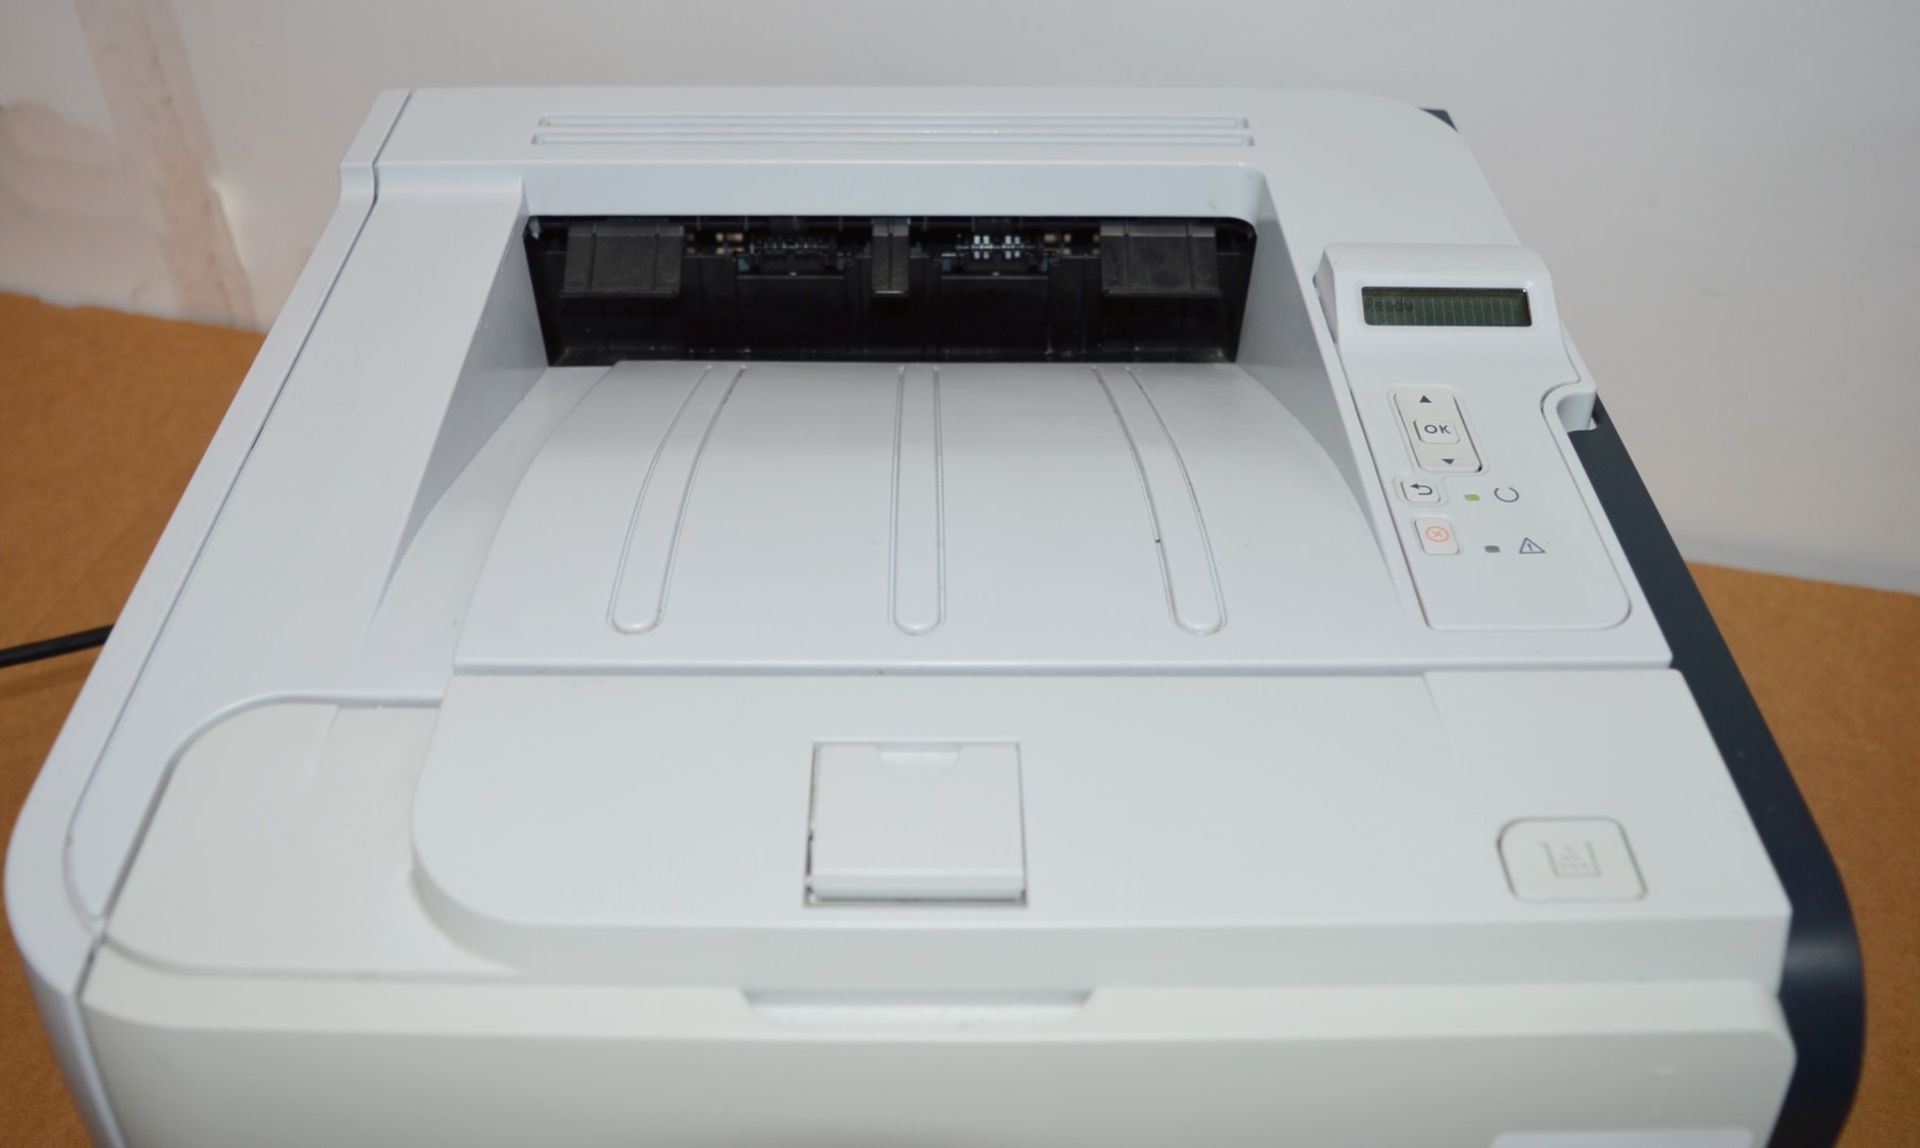 1 x HP Laserjet P2055 Desktop Laser Printer - Good Working Order - Includes Two Toners - CL010 - Ref - Image 6 of 10